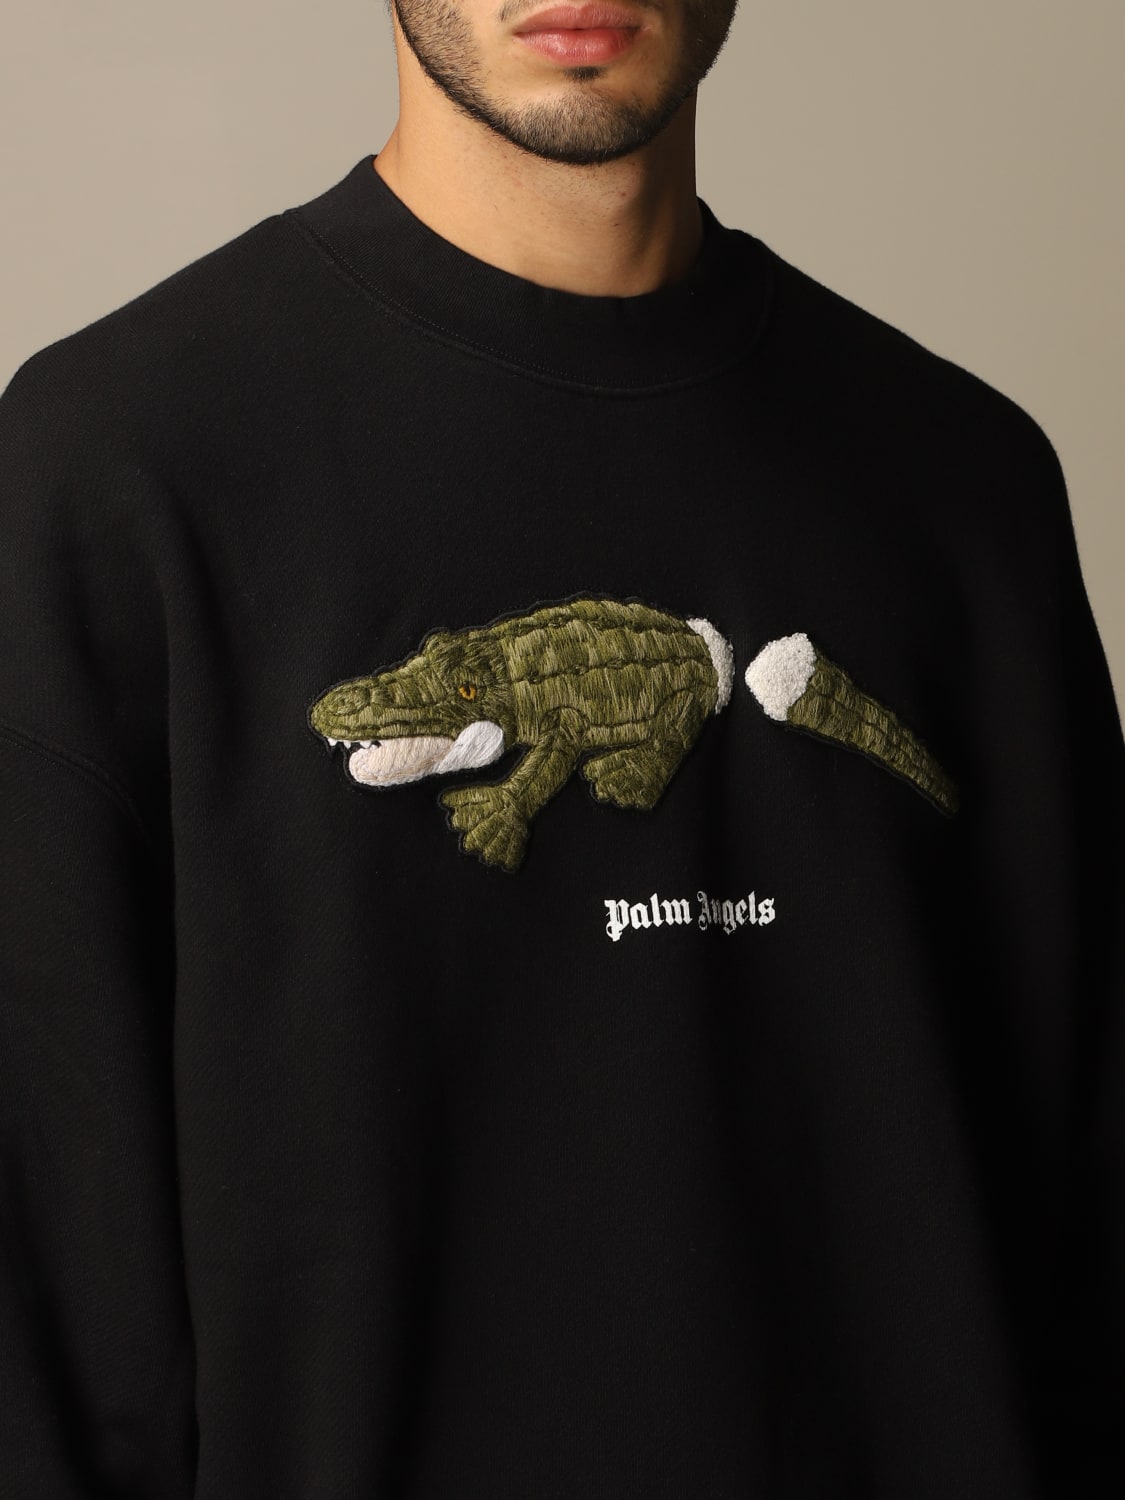 Palm Angels Croco Crocodile Embroidered Patch Sweatshirt Black